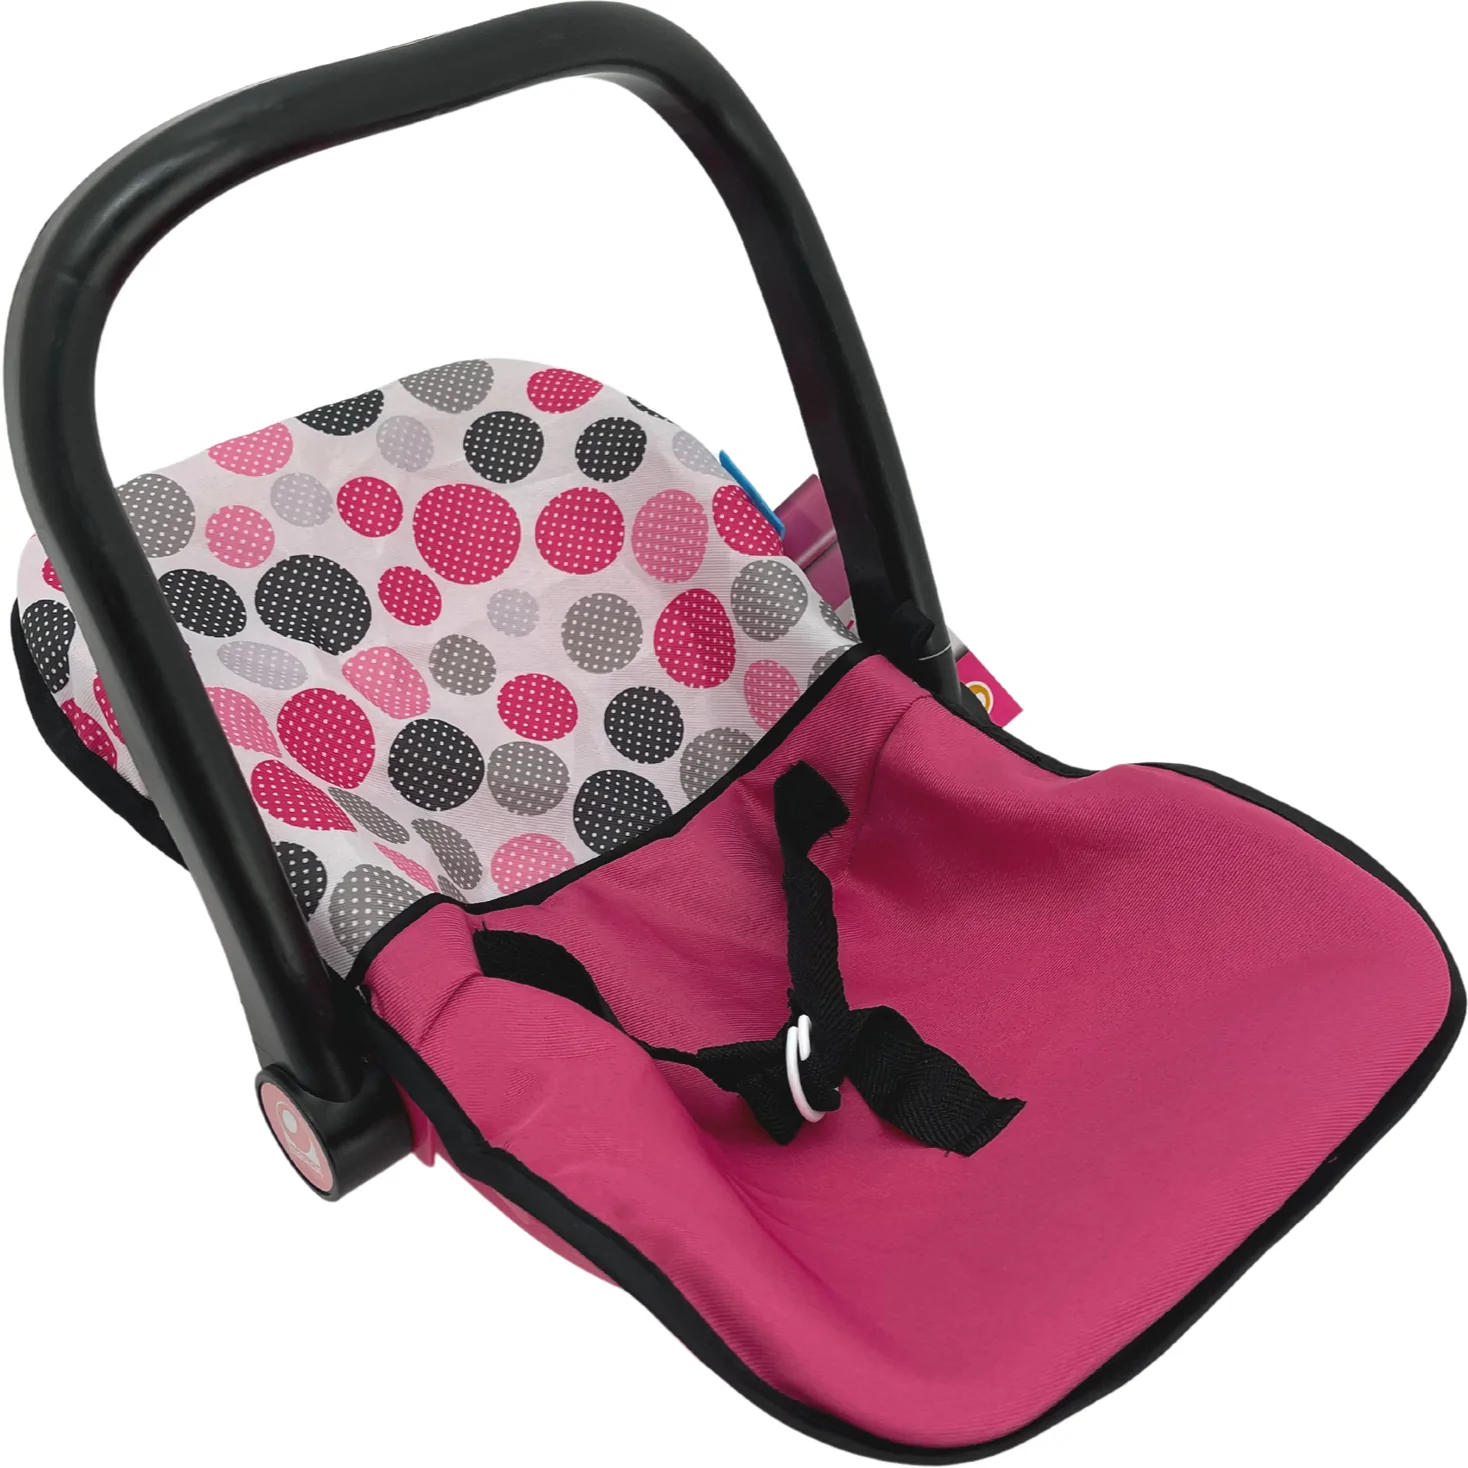 Hauck Doll Car Seat / Pretend Play / Pink, Black & Grey / Doll Accessories